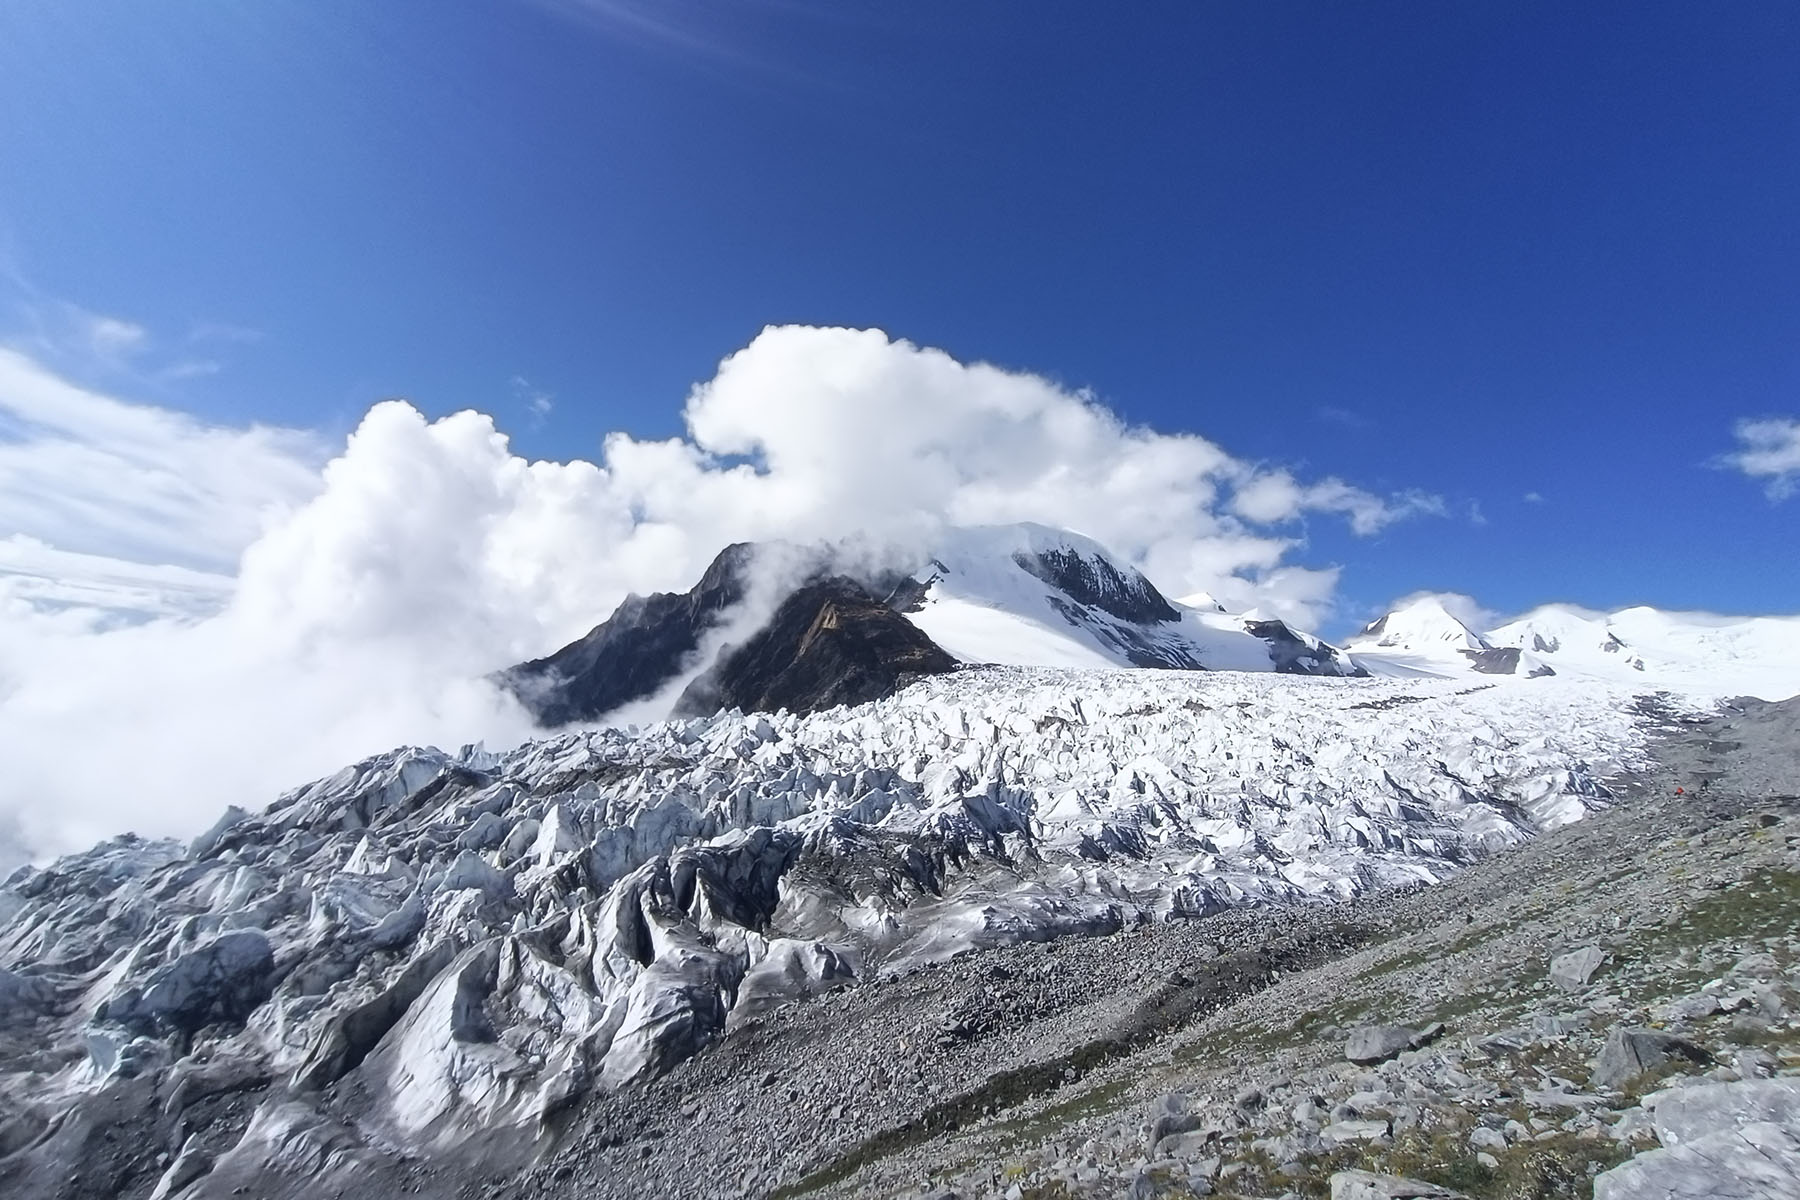 Mt. Zhongshan Glacier